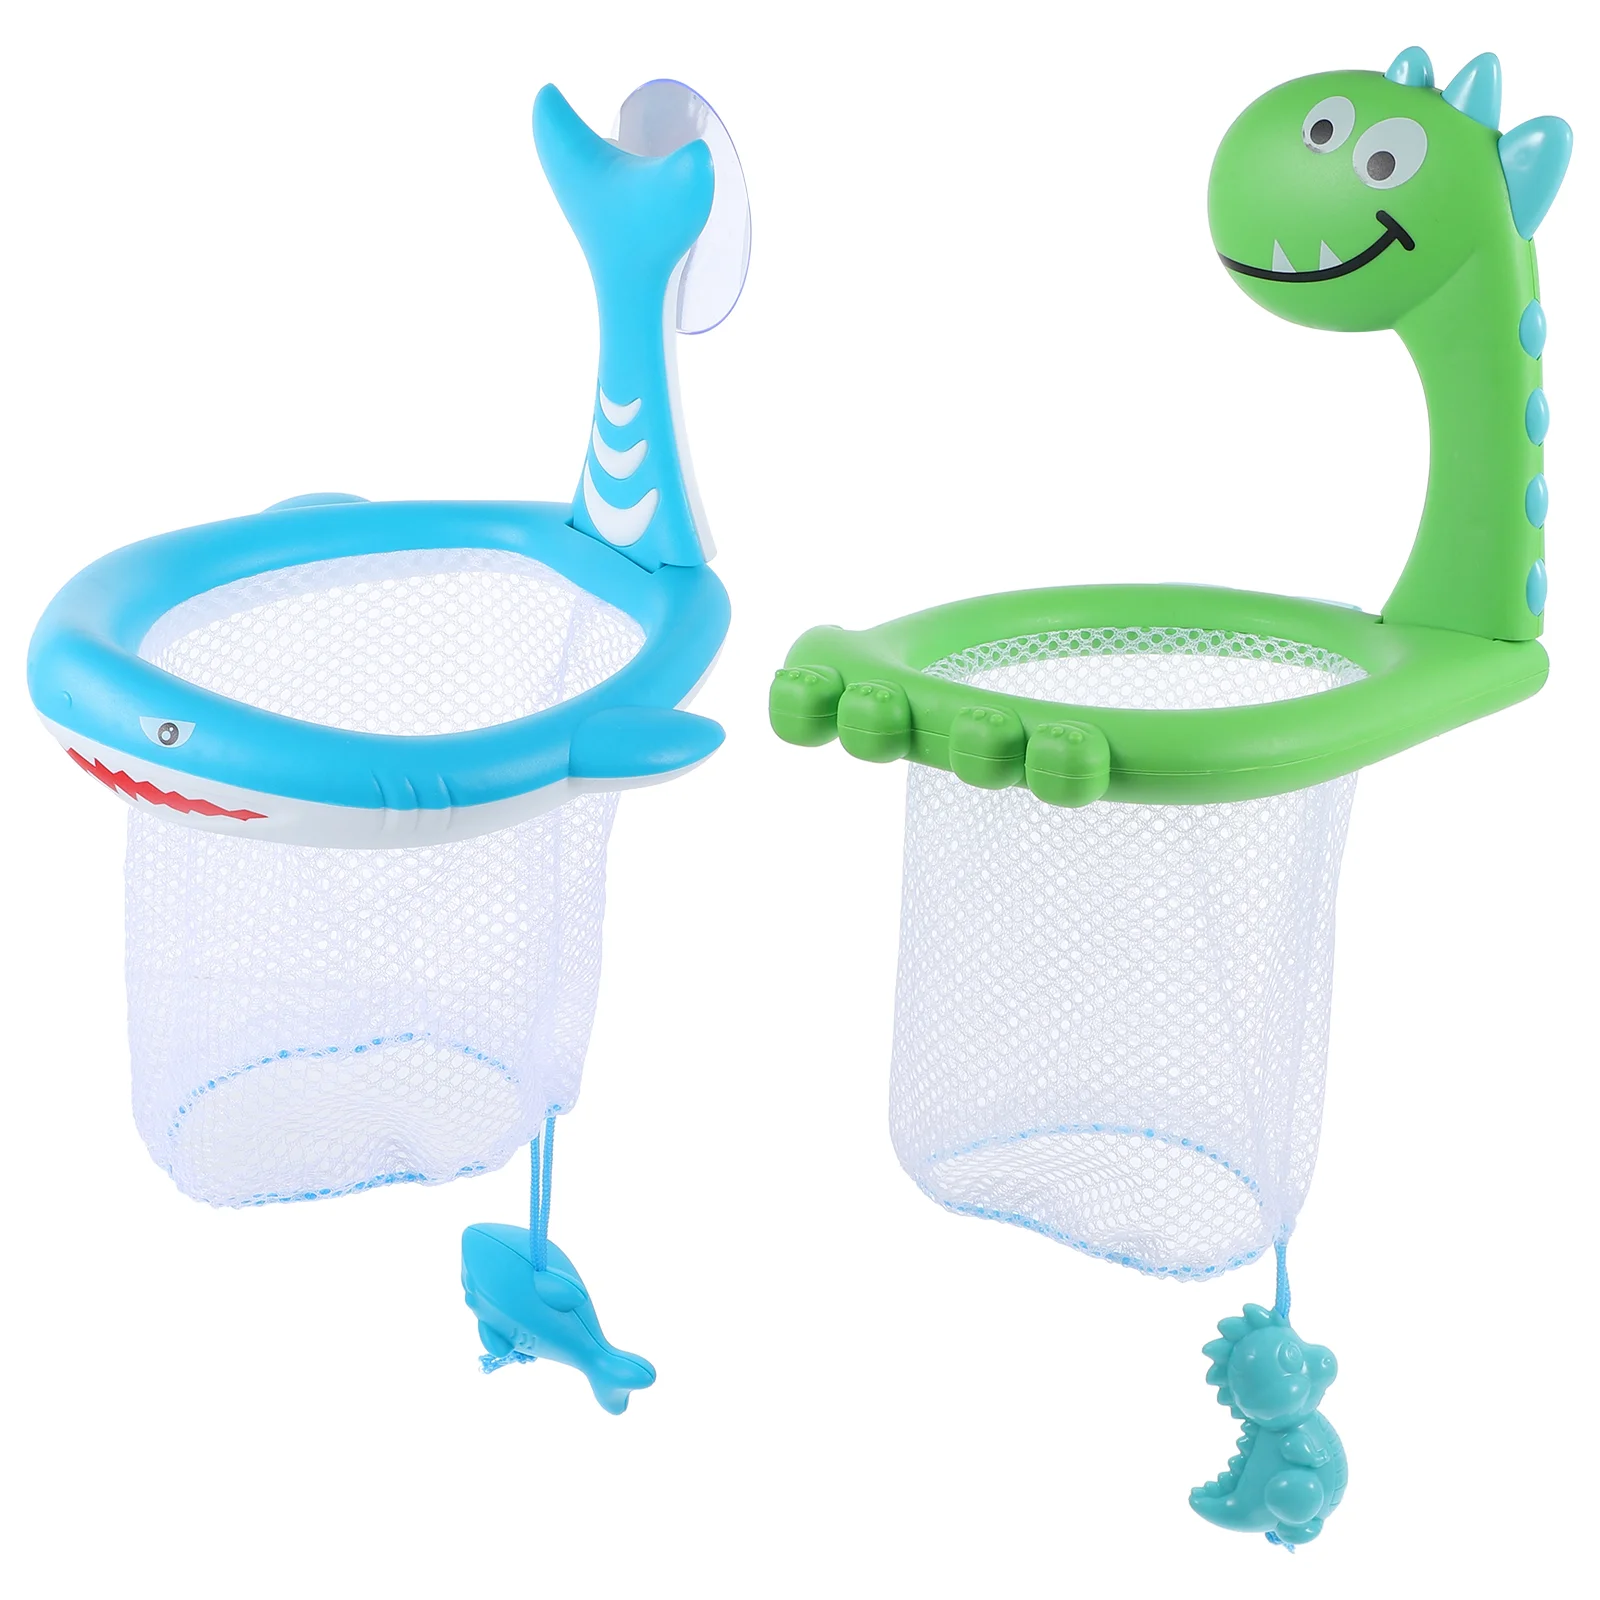 

2 Pcs Bathroom Toys Hanging Bag Bin Holder Mold Resistant Net Tub Mesh Storage Bucket Pp Bags Child